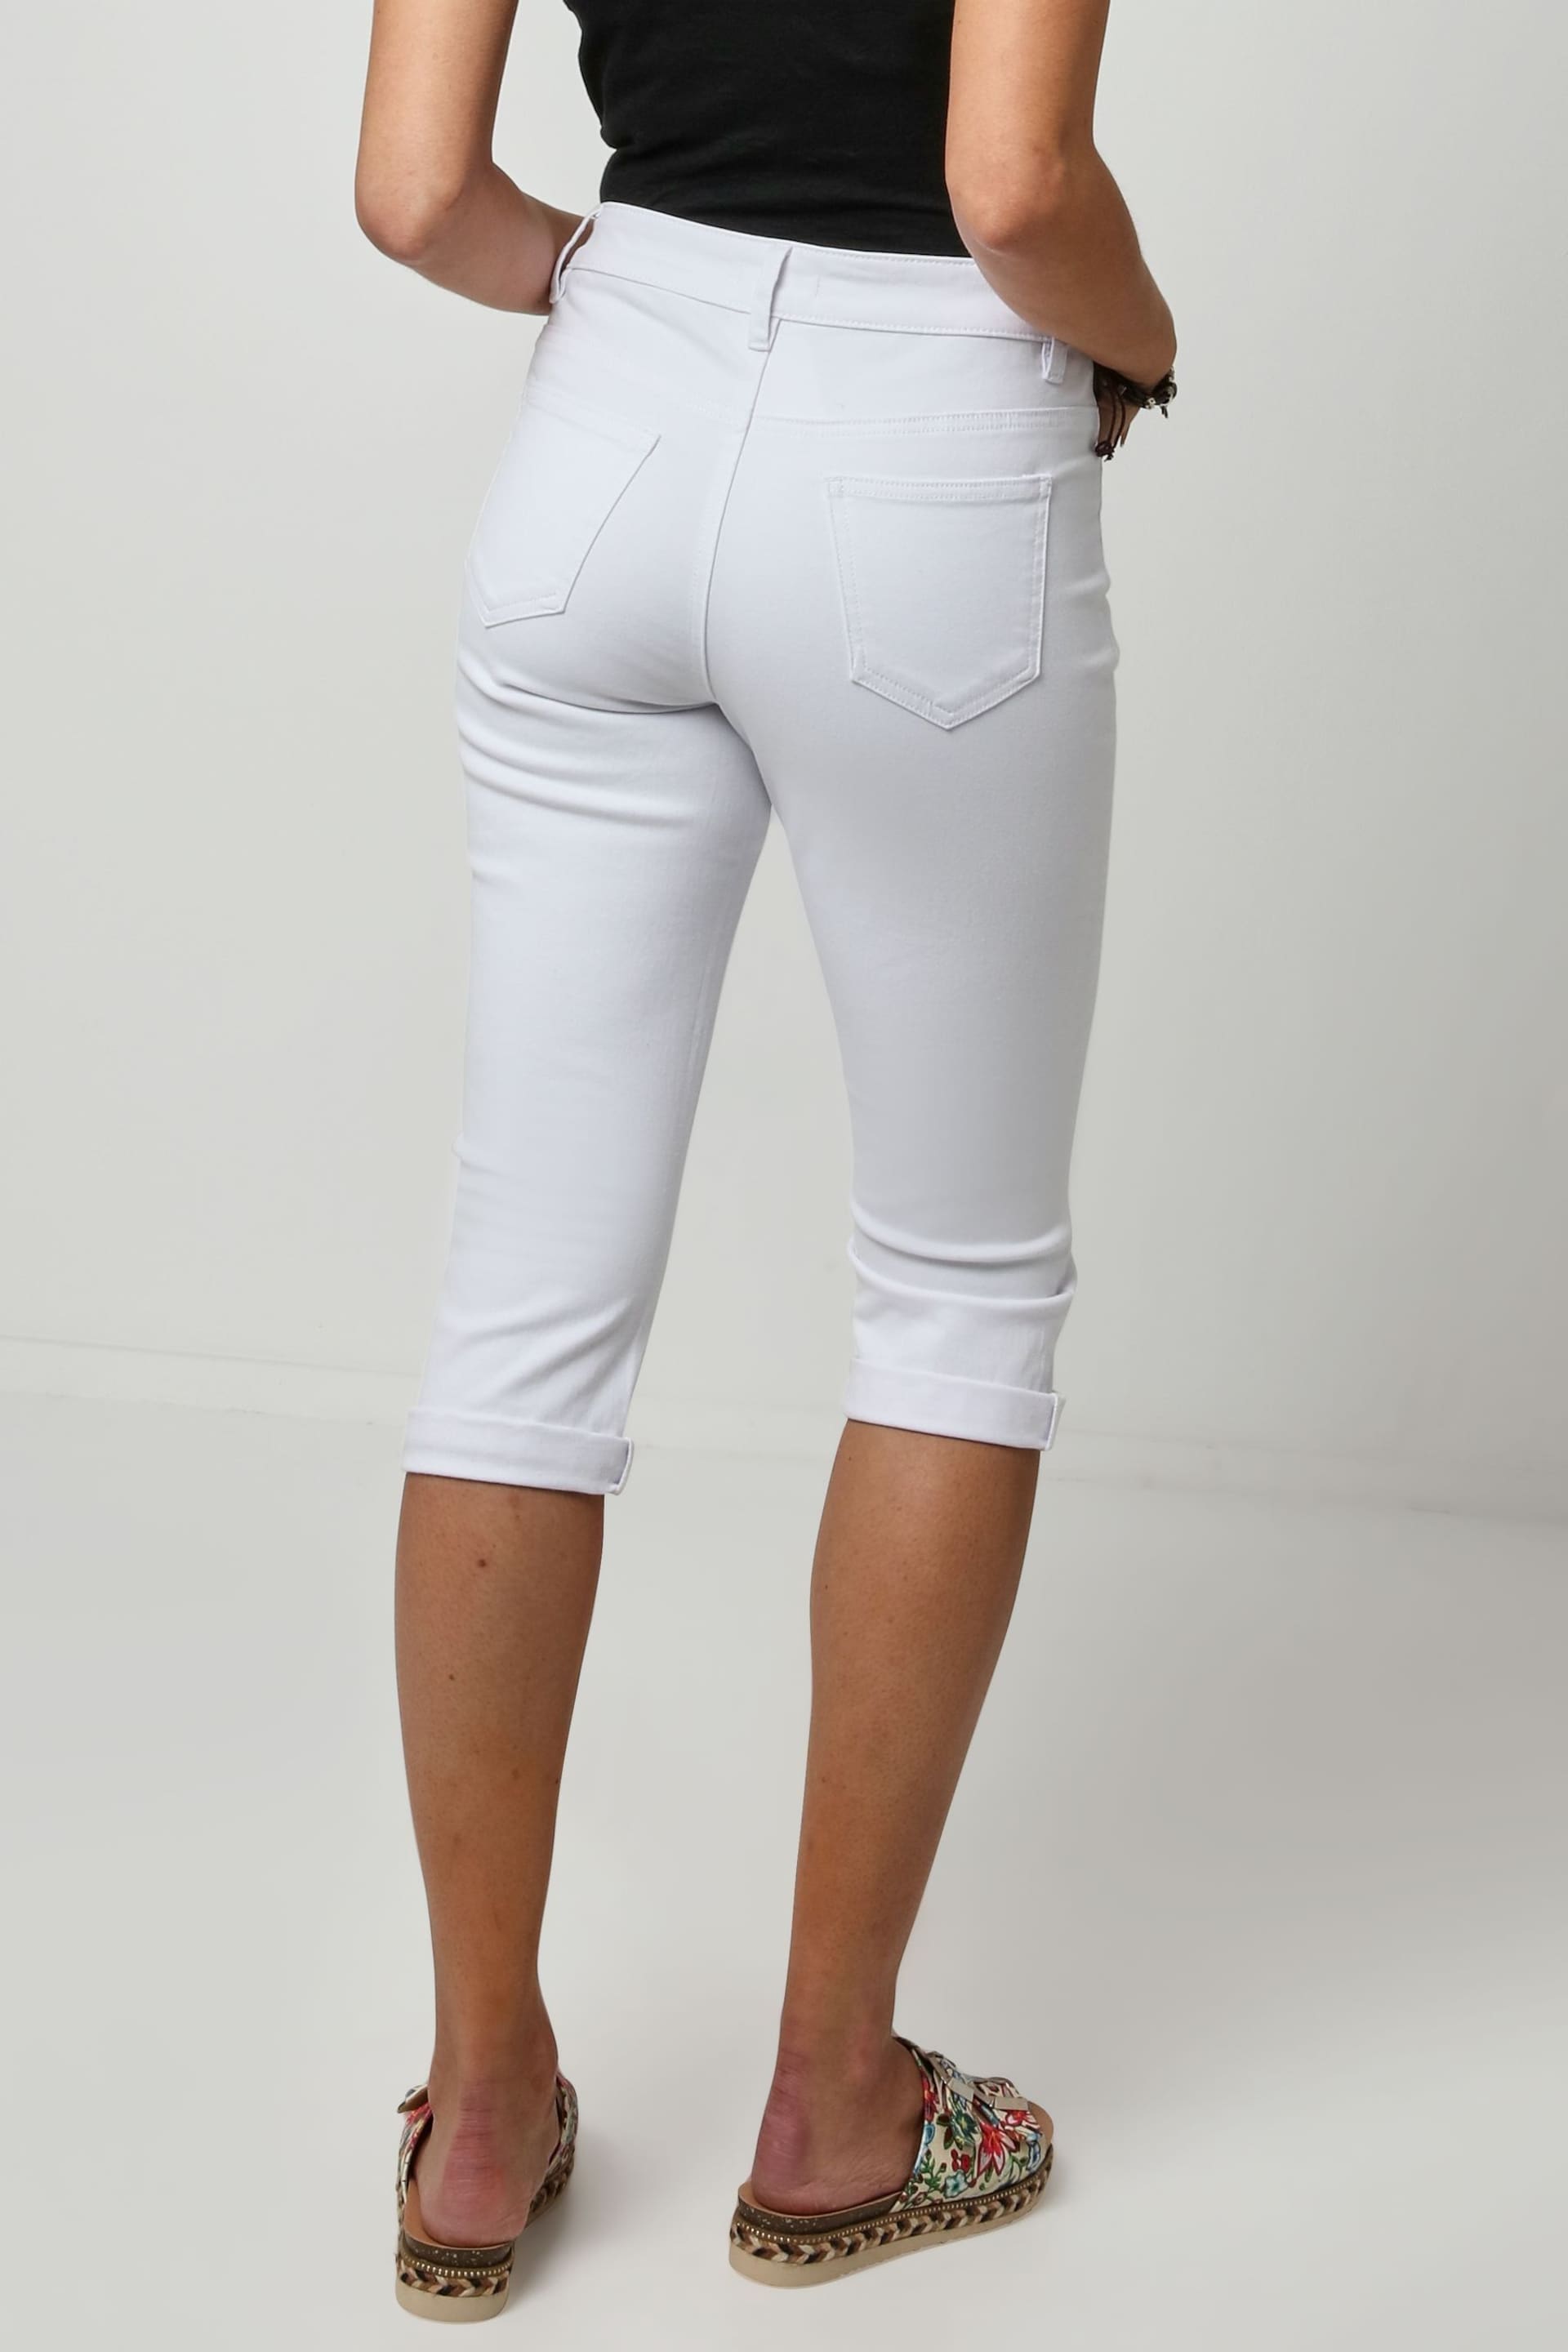 Joe Browns White Essentials Stretch Capri Trousers - Image 2 of 3